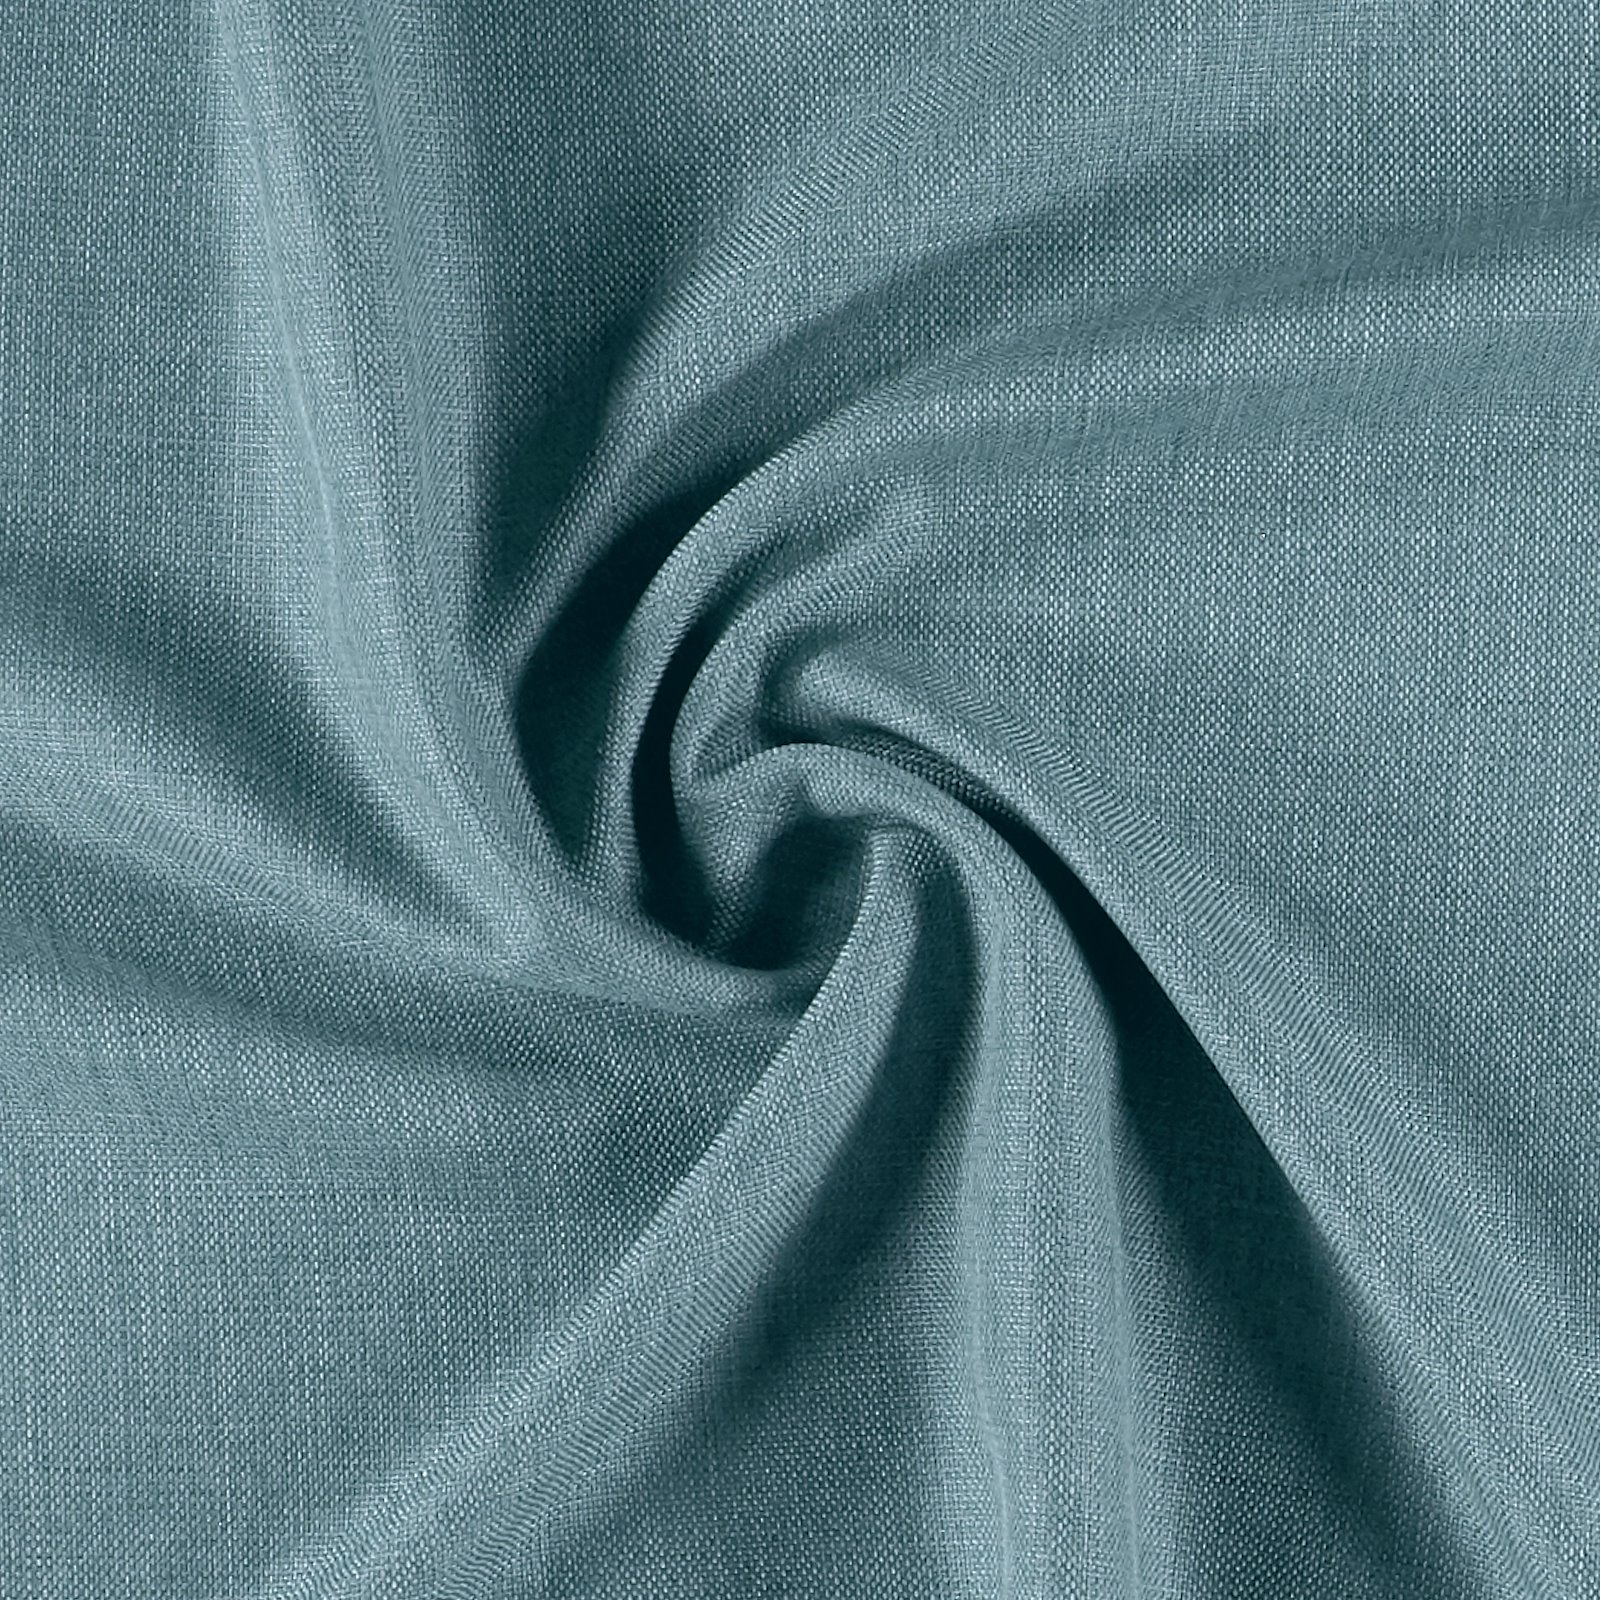 Powder Blue - Cotton Upholstery Fabric